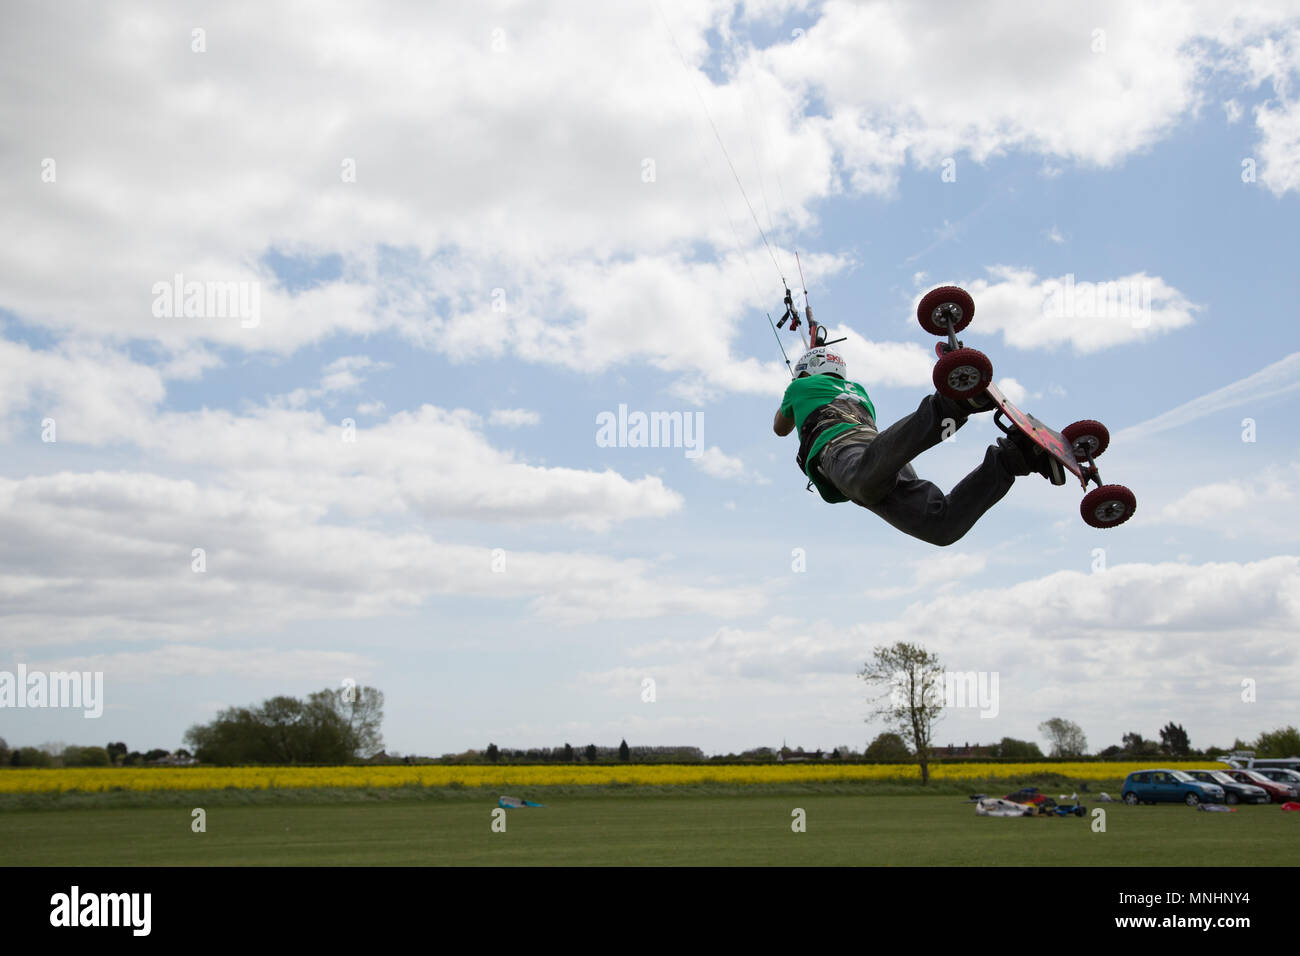 Extreme sport kite landboarding in Essex, UK.  Going airborne. Stock Photo